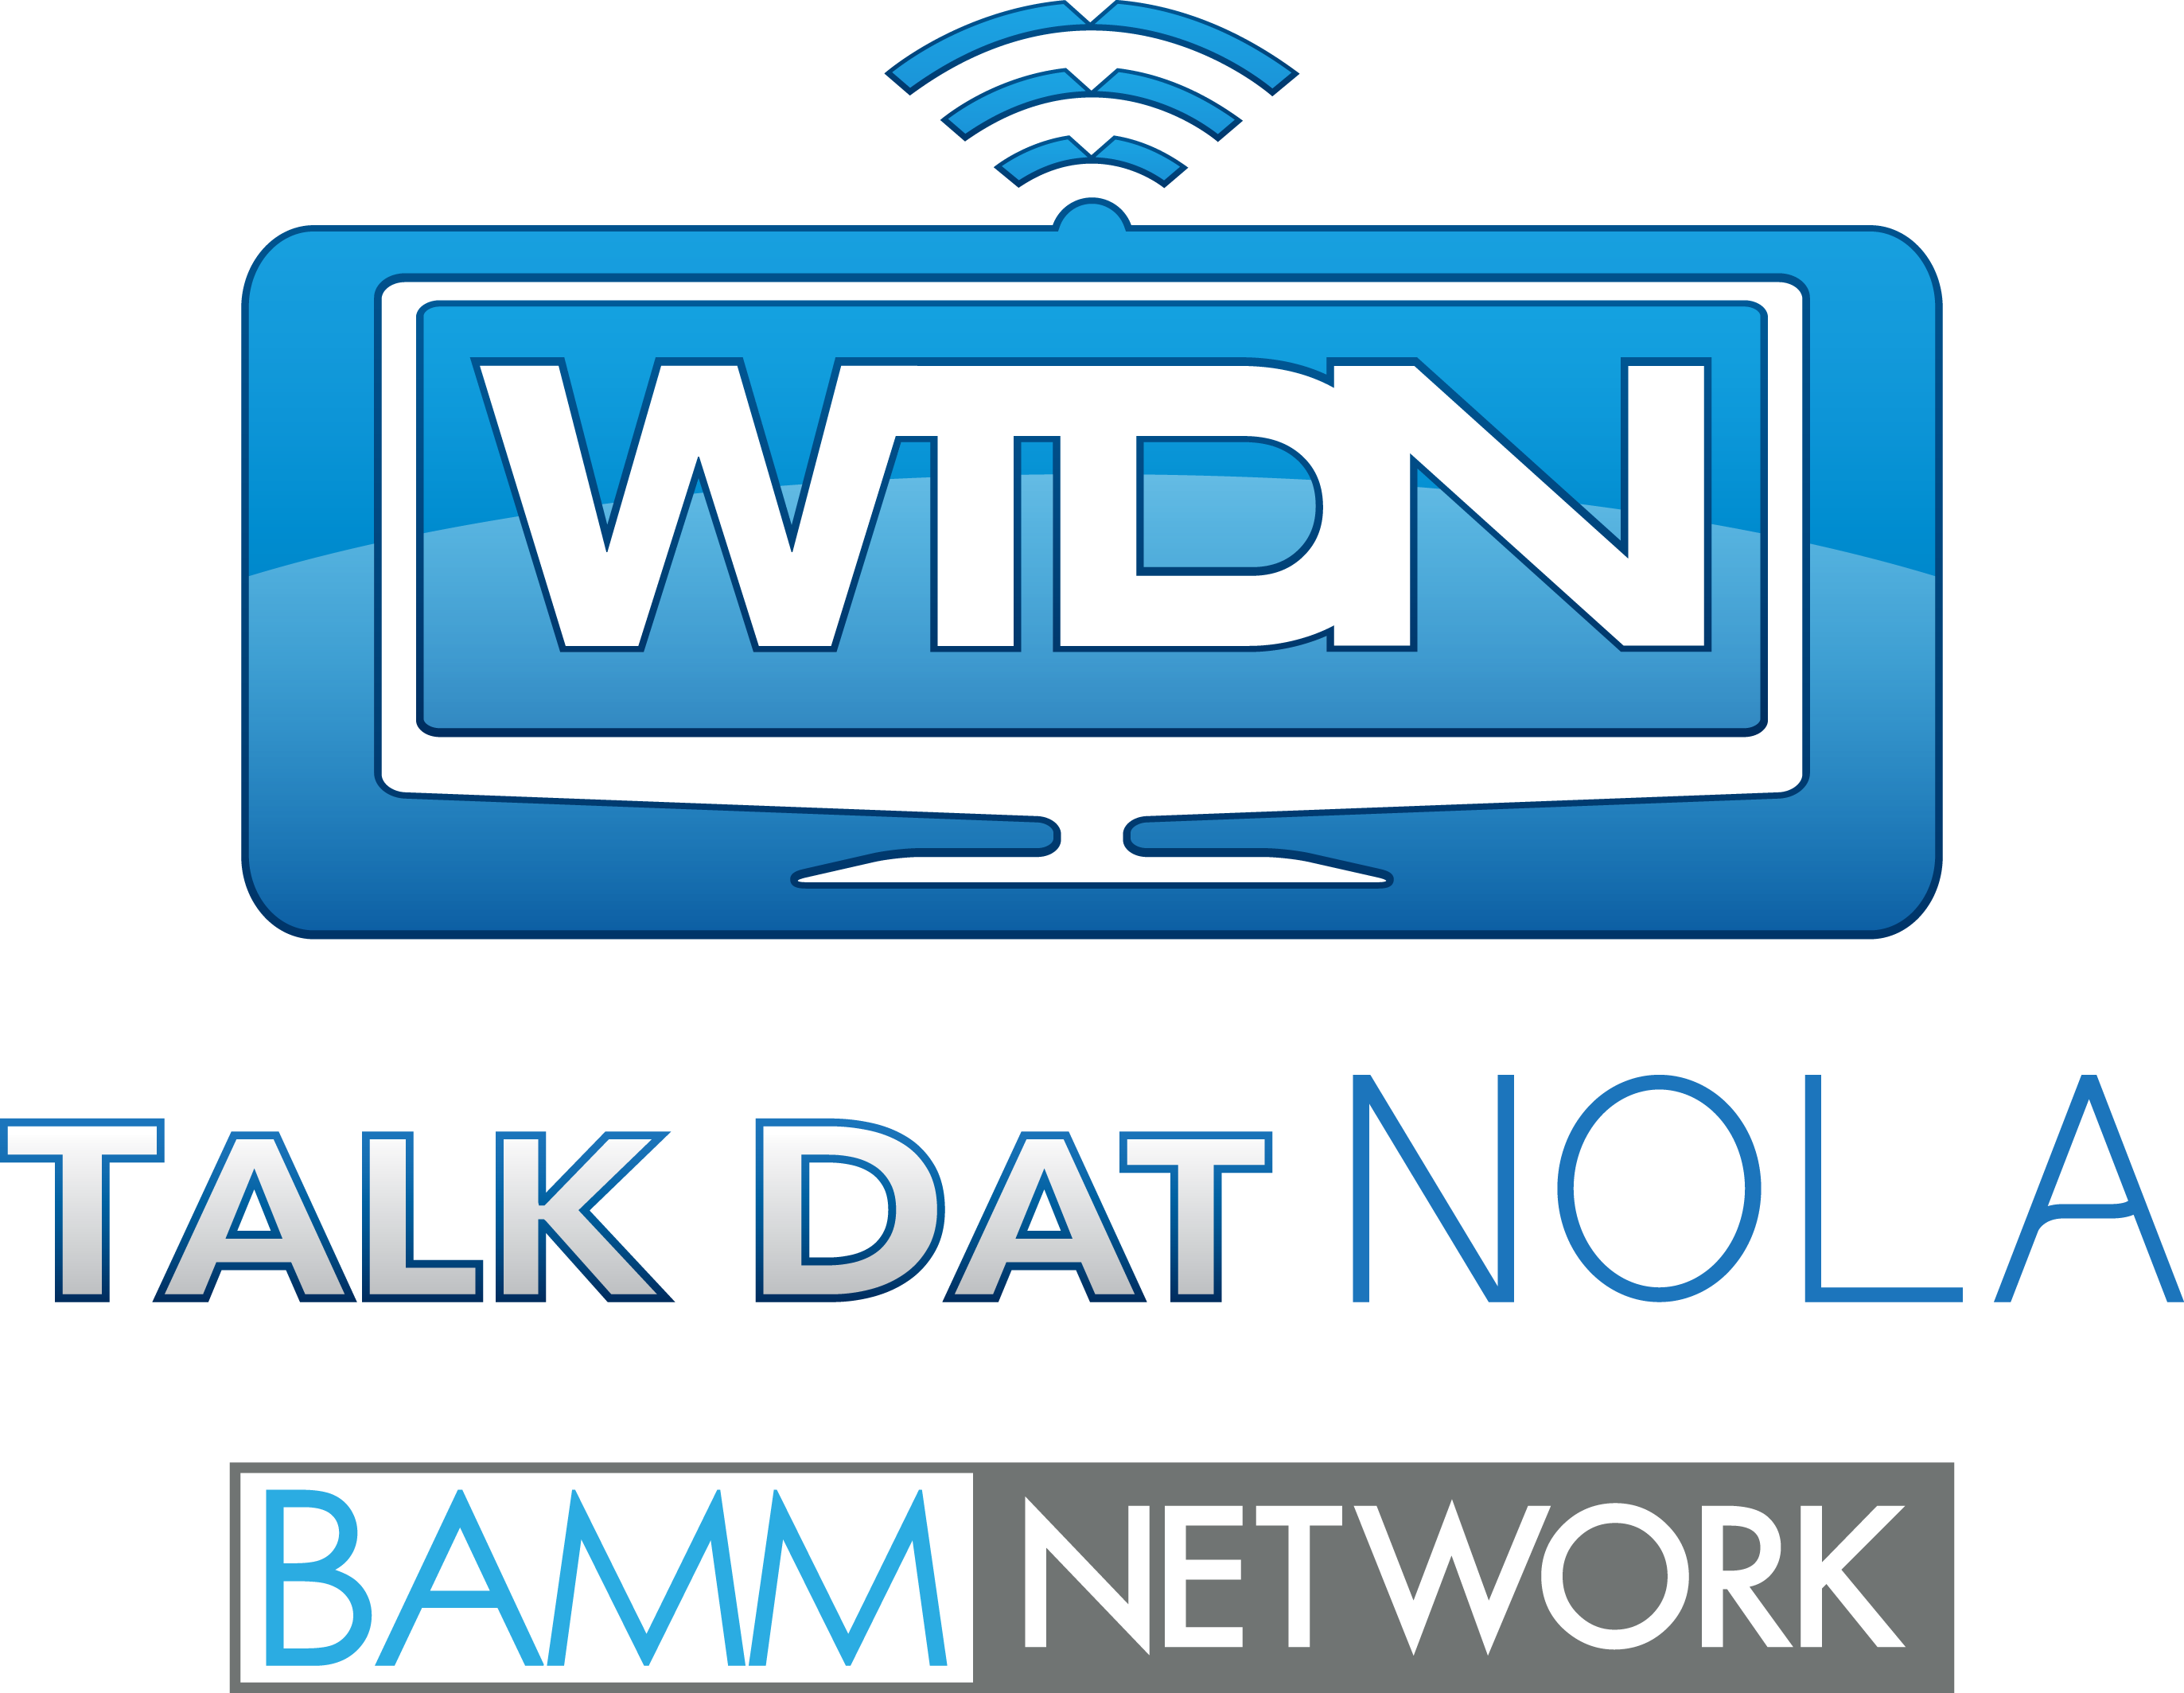 WTDN Logo